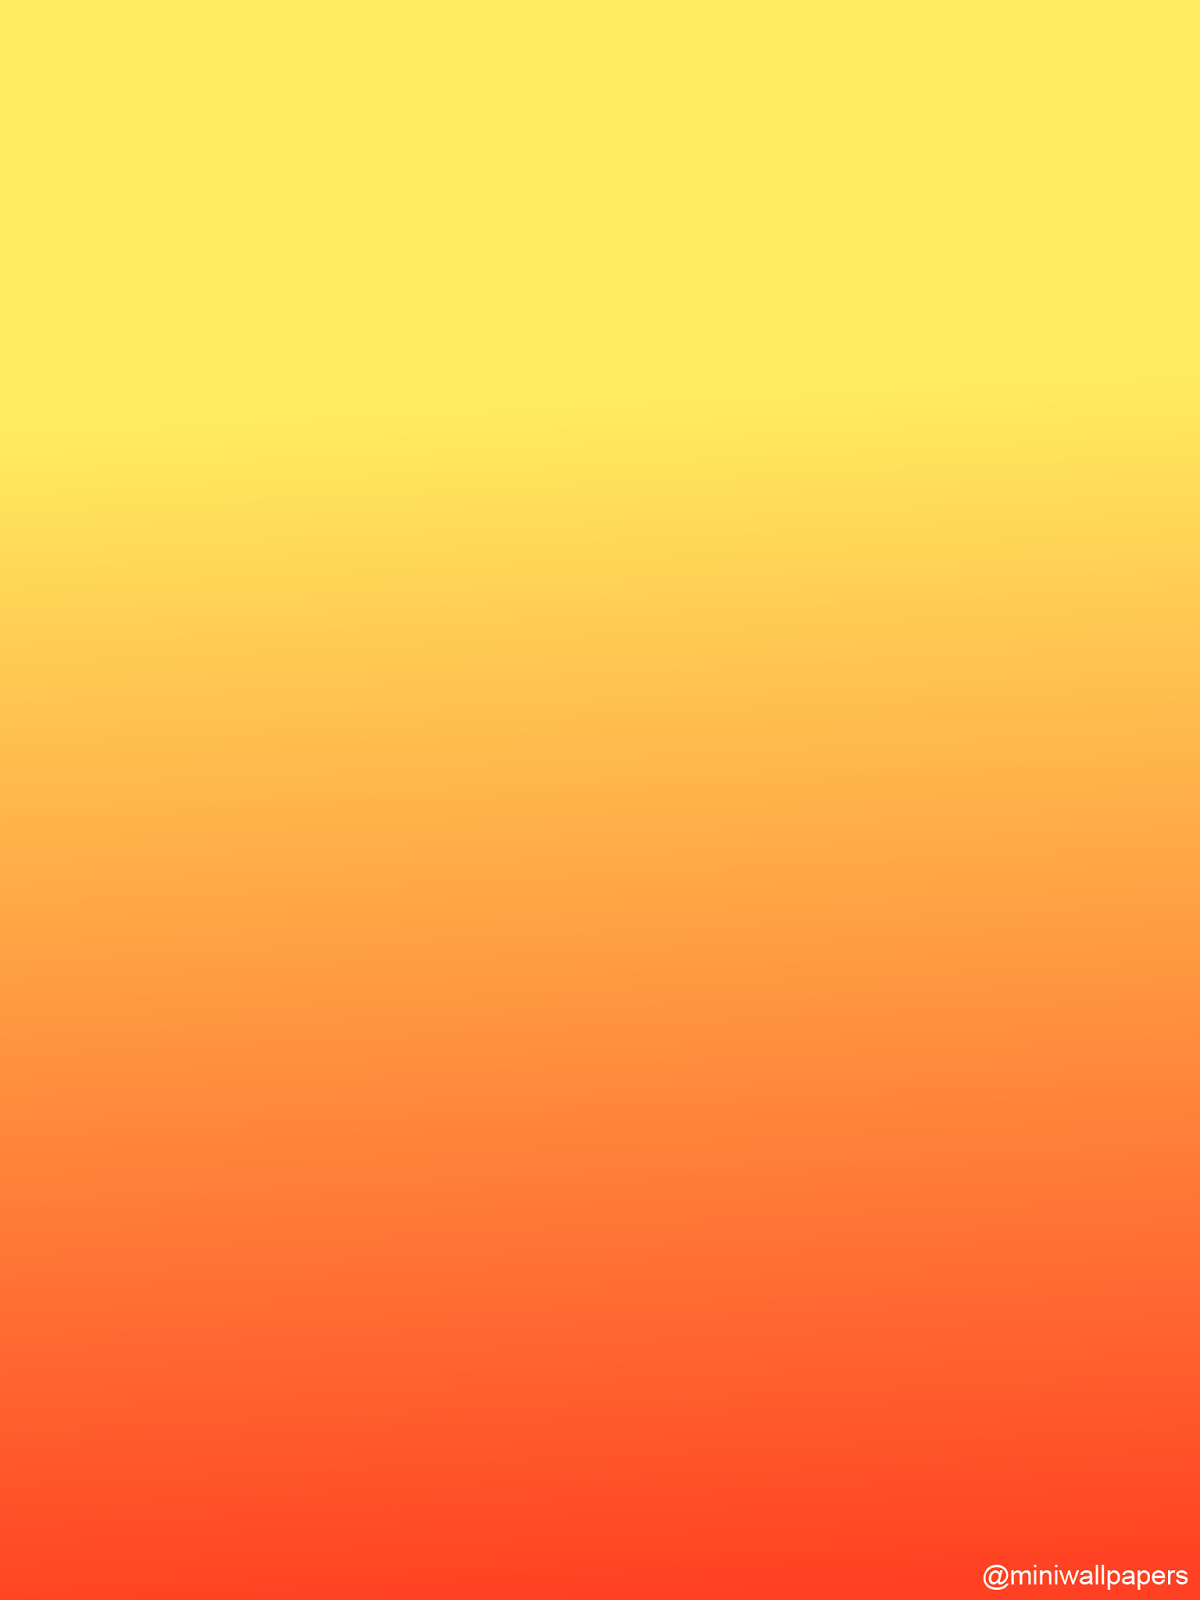 Lockscreenfun Orange Yellow Gradient iPad Wallpaper